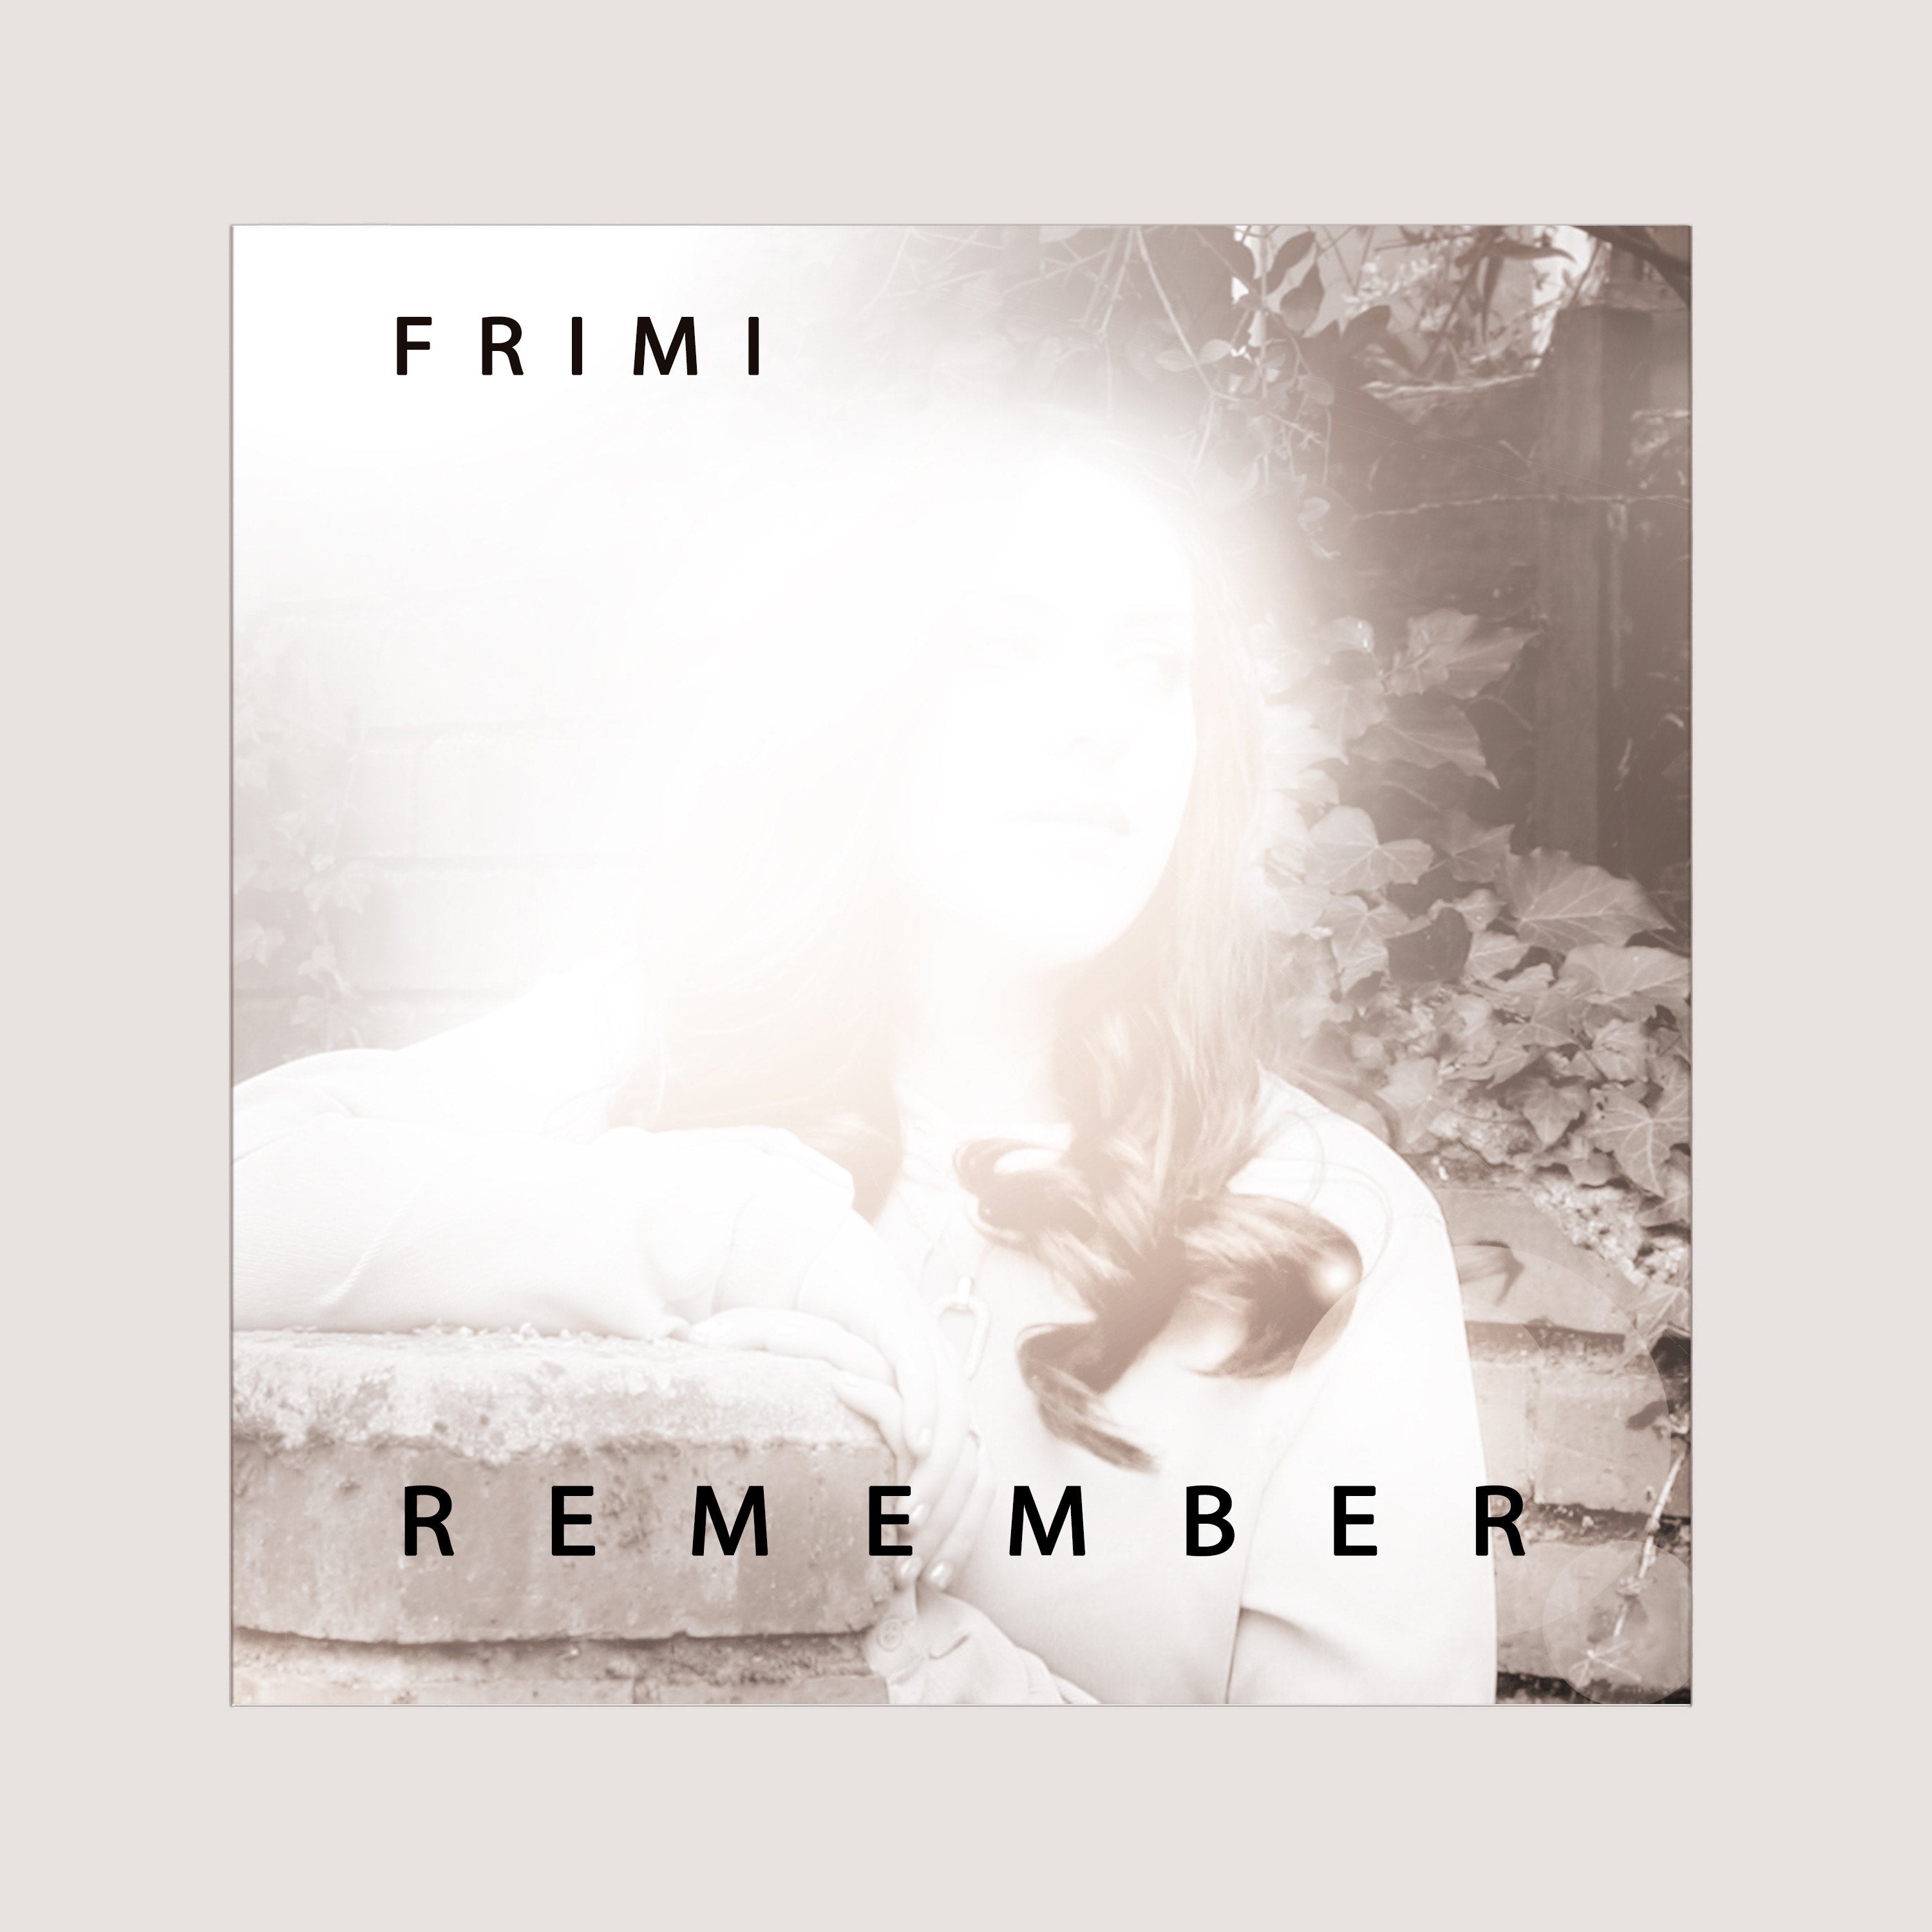 Frimi - Remember (Single)